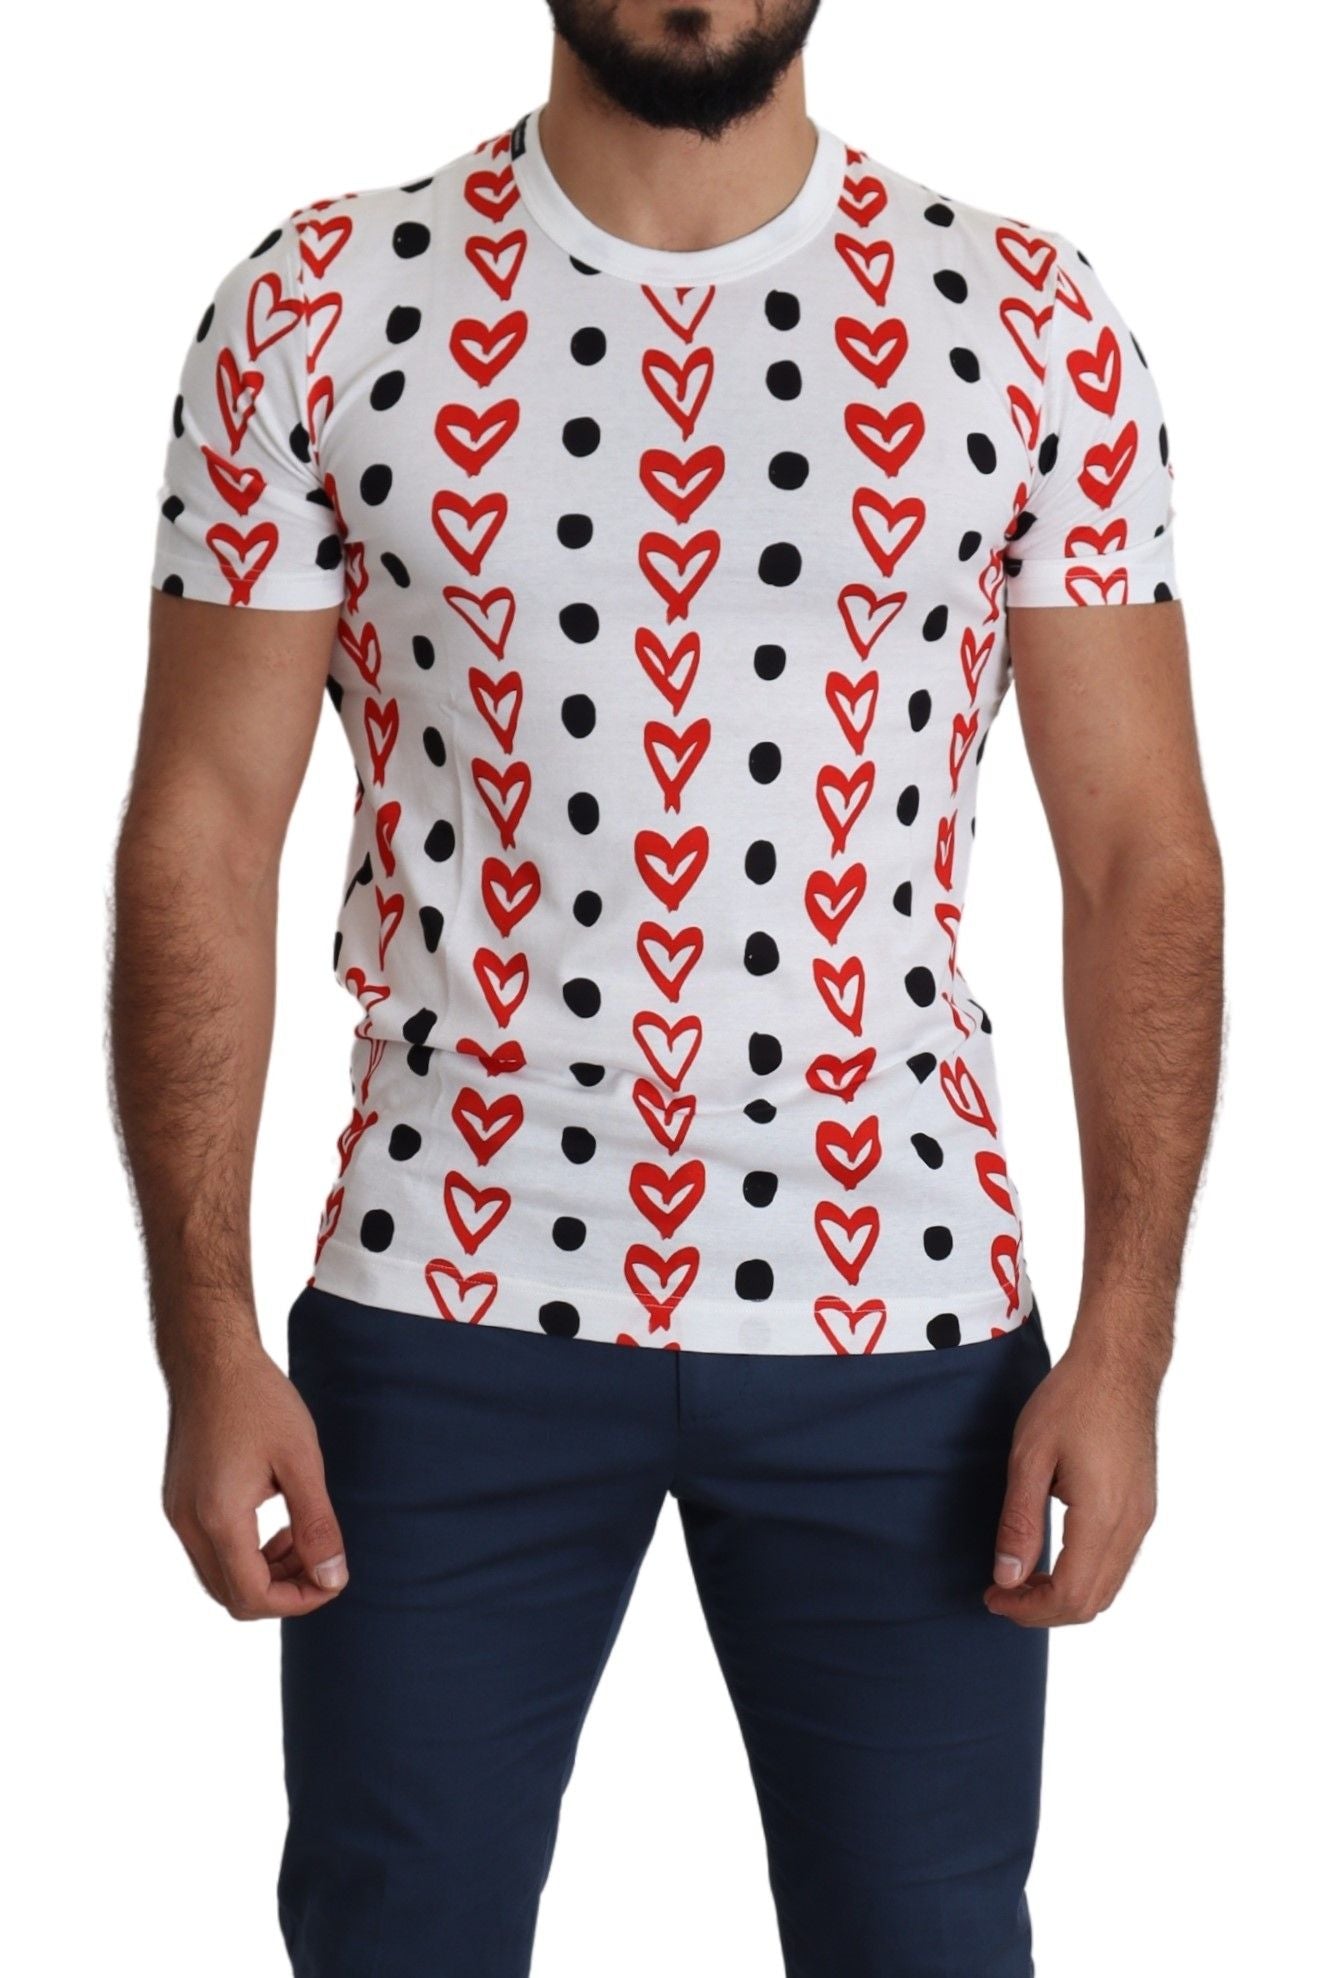 Fashionsarah.com Fashionsarah.com Dolce & Gabbana White Hearts Print  Cotton Men Top T-shirt